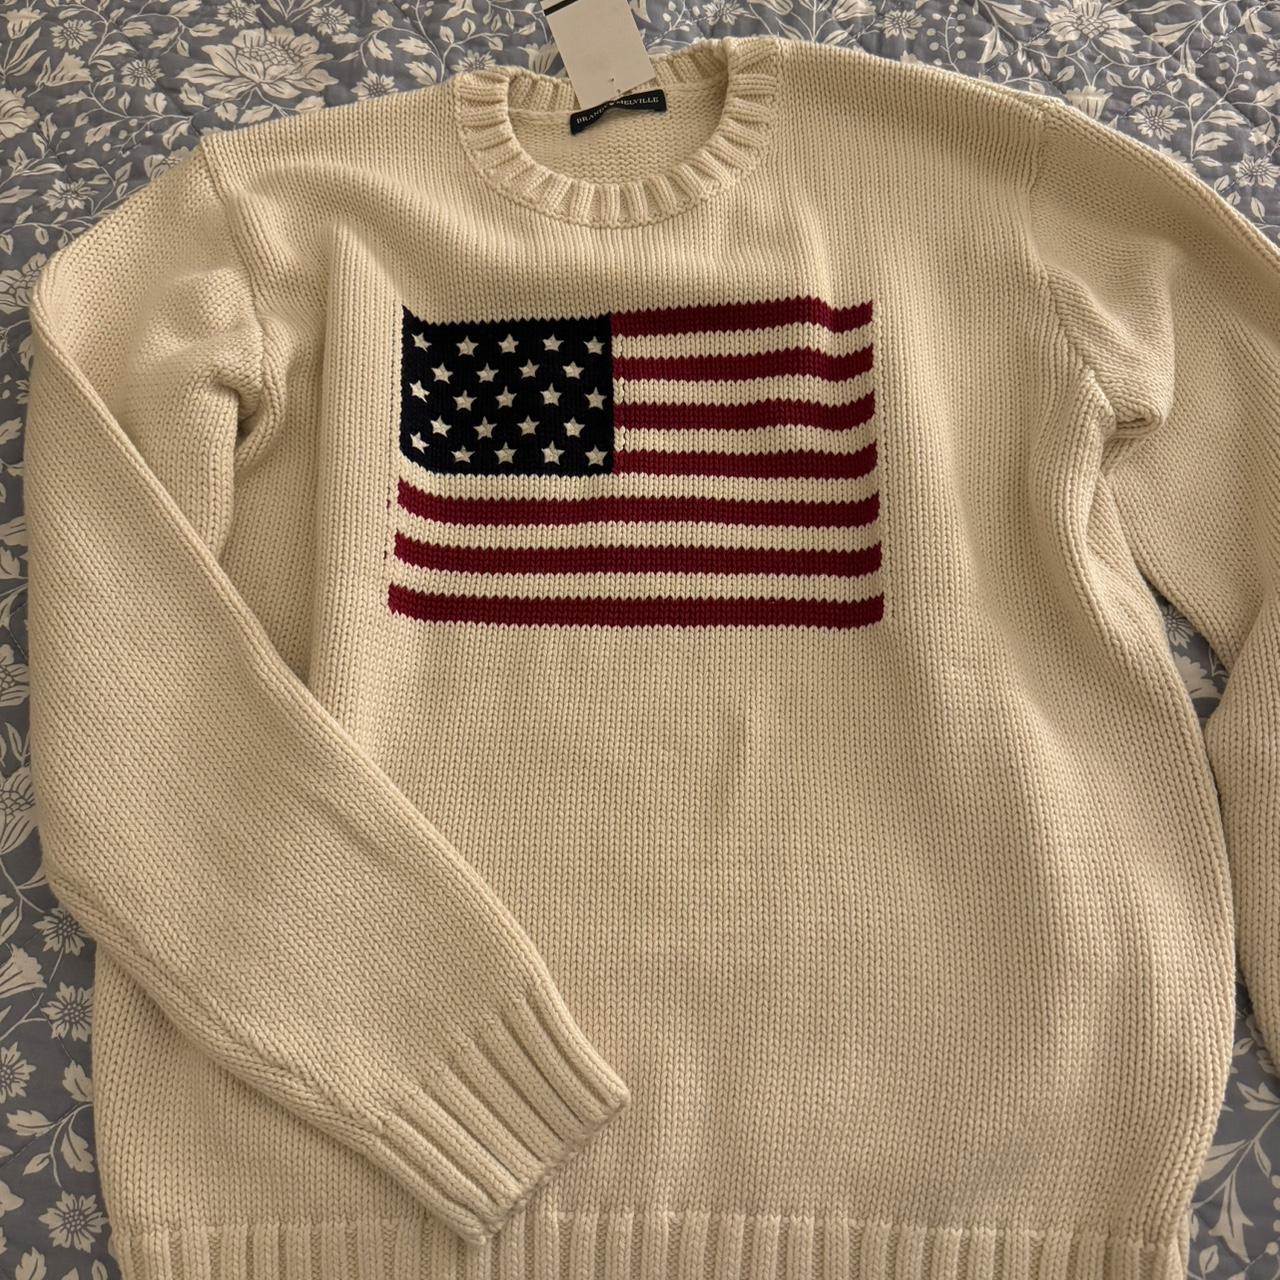 Vintage American flag knit sweater Brand is Six - Depop